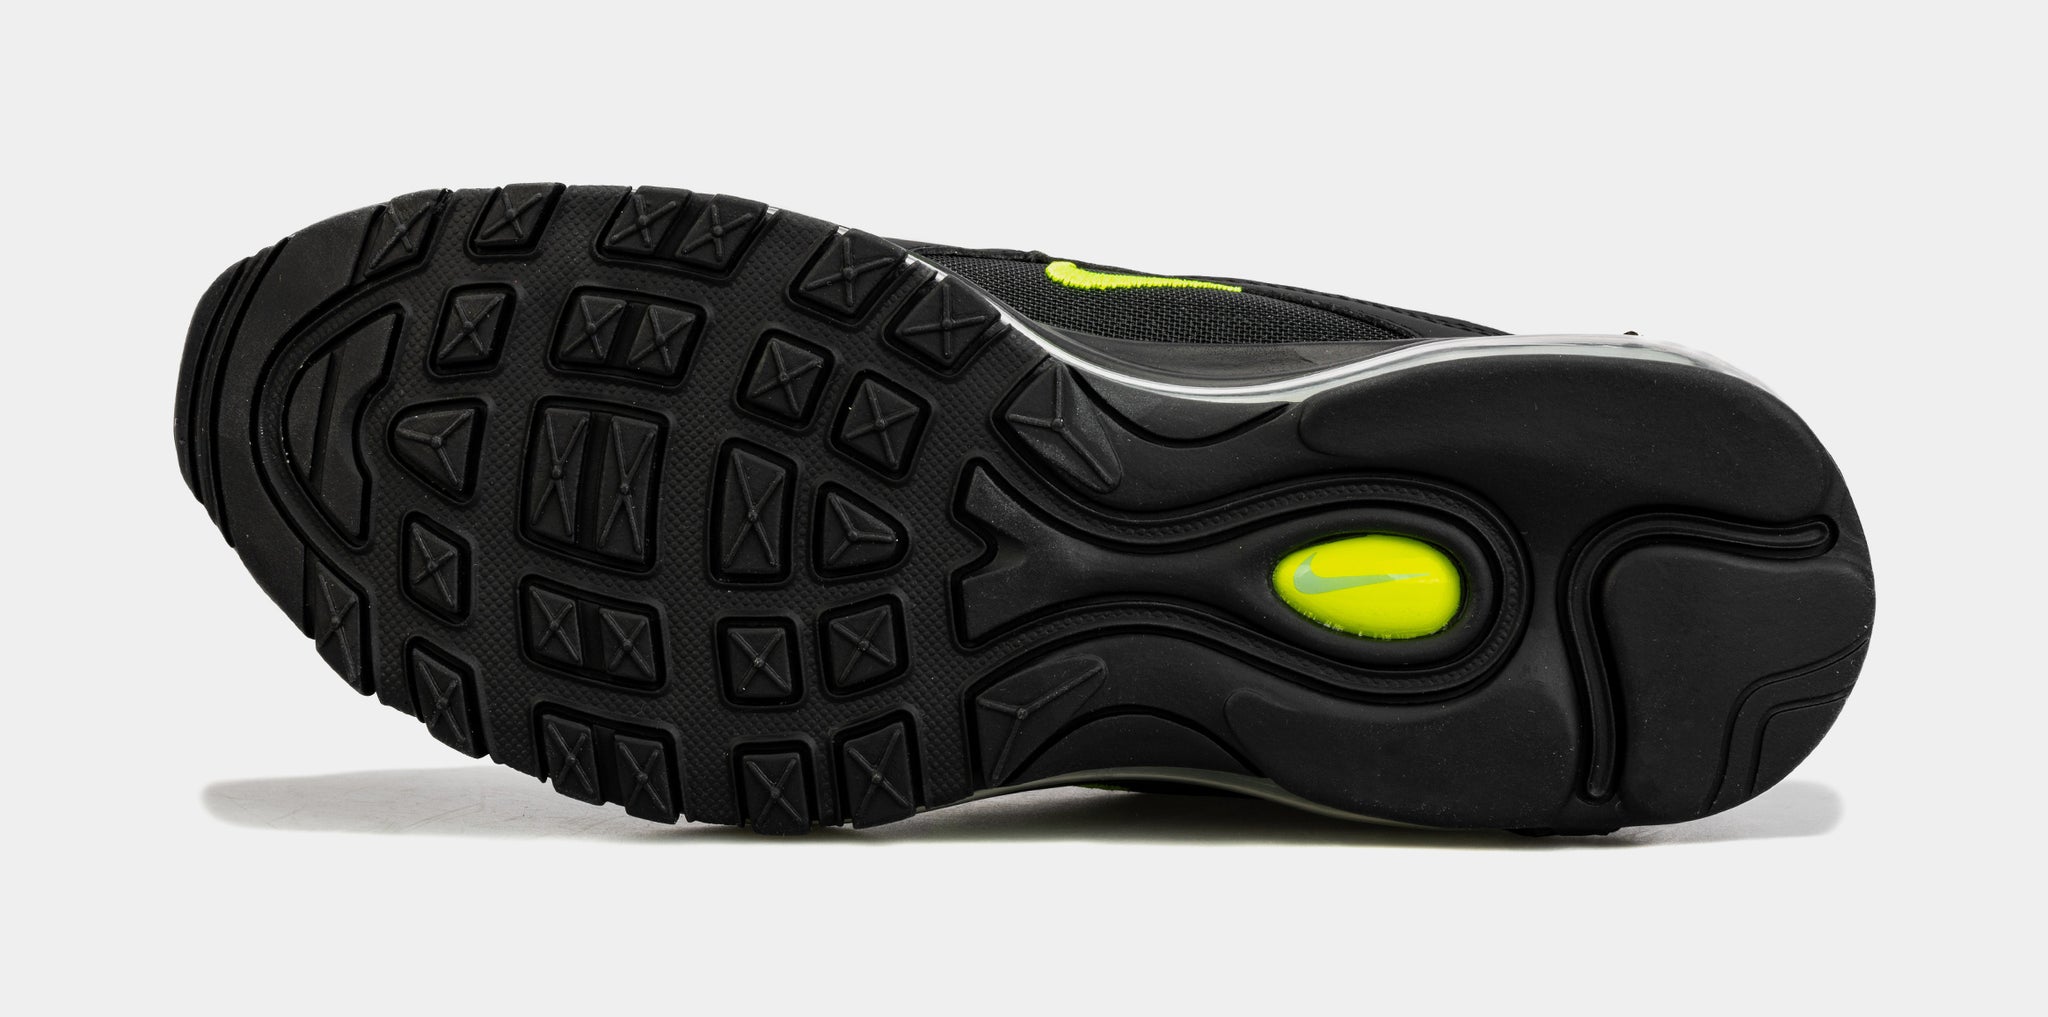 Enviar Larry Belmont torre Nike Air Max 97 Neon Mens Running Shoes Black Grey DX4235-001 – Shoe Palace